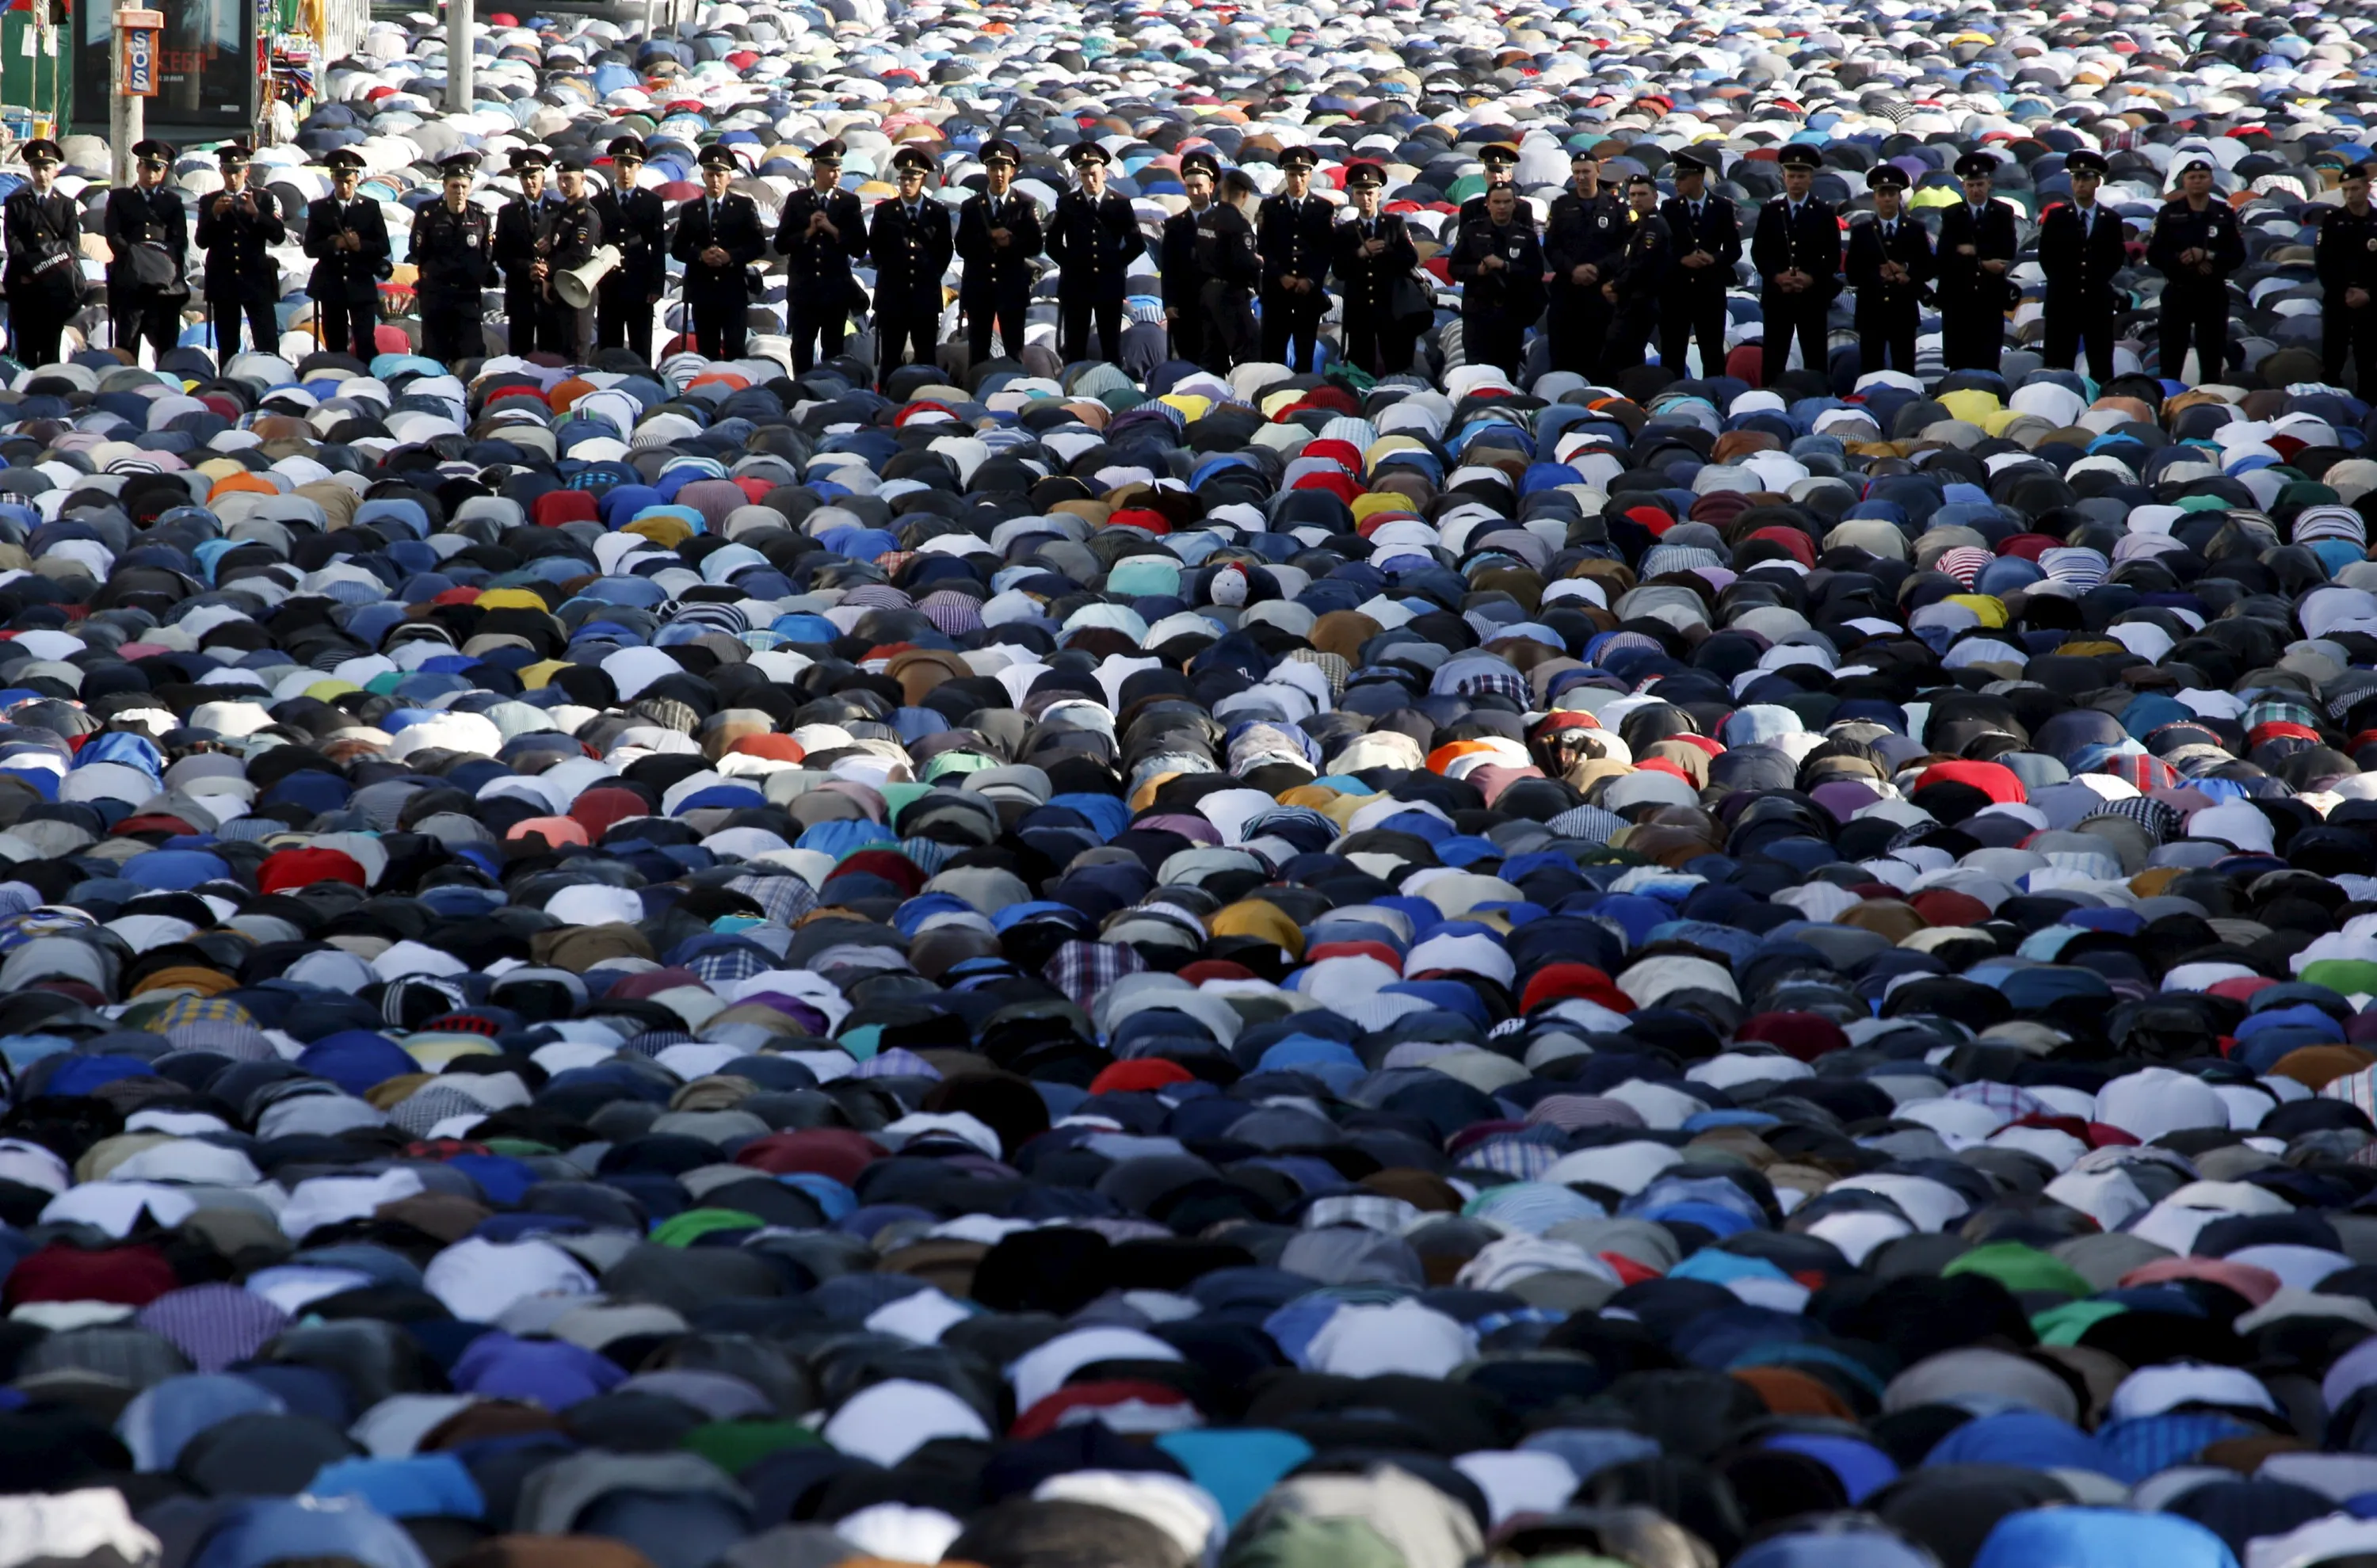 Ид намаз. Мусульмане молятся в Москве. Толпа мусульман. Мусульмане молятся на улице. Толпы мусульман в Москве.